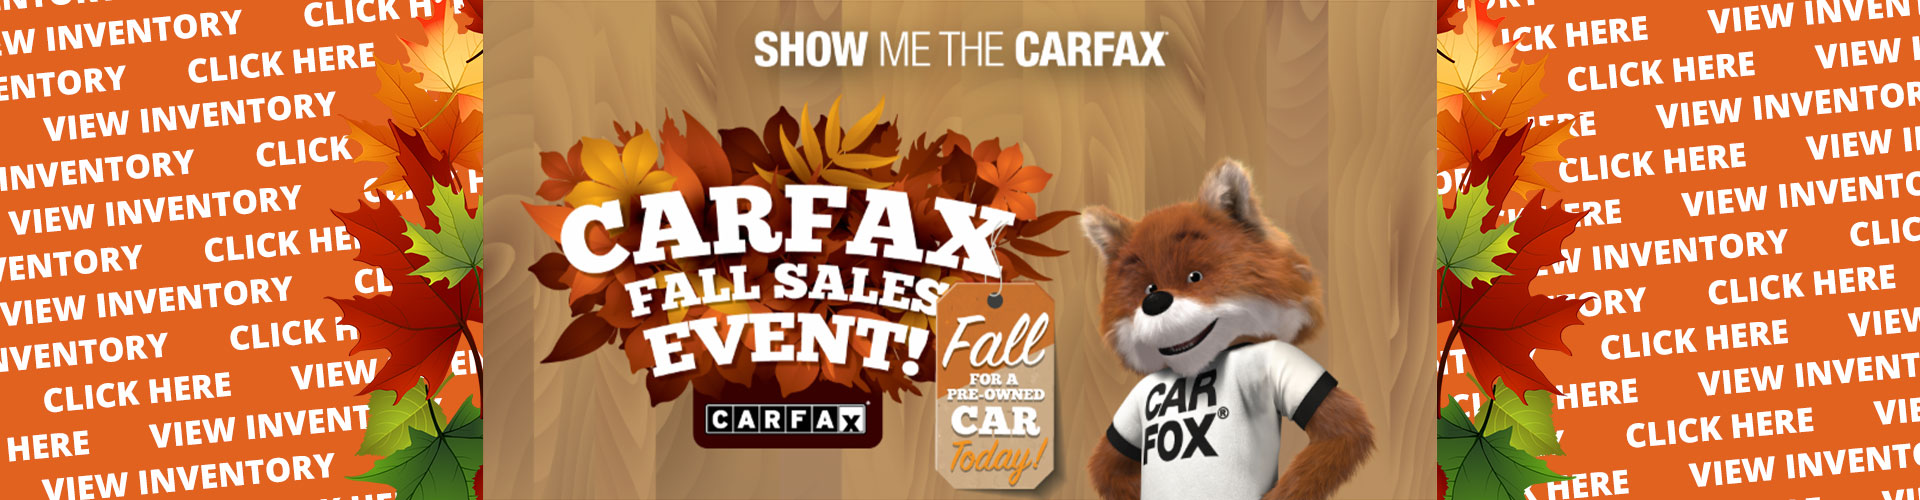 CarFax Fall Sales Event